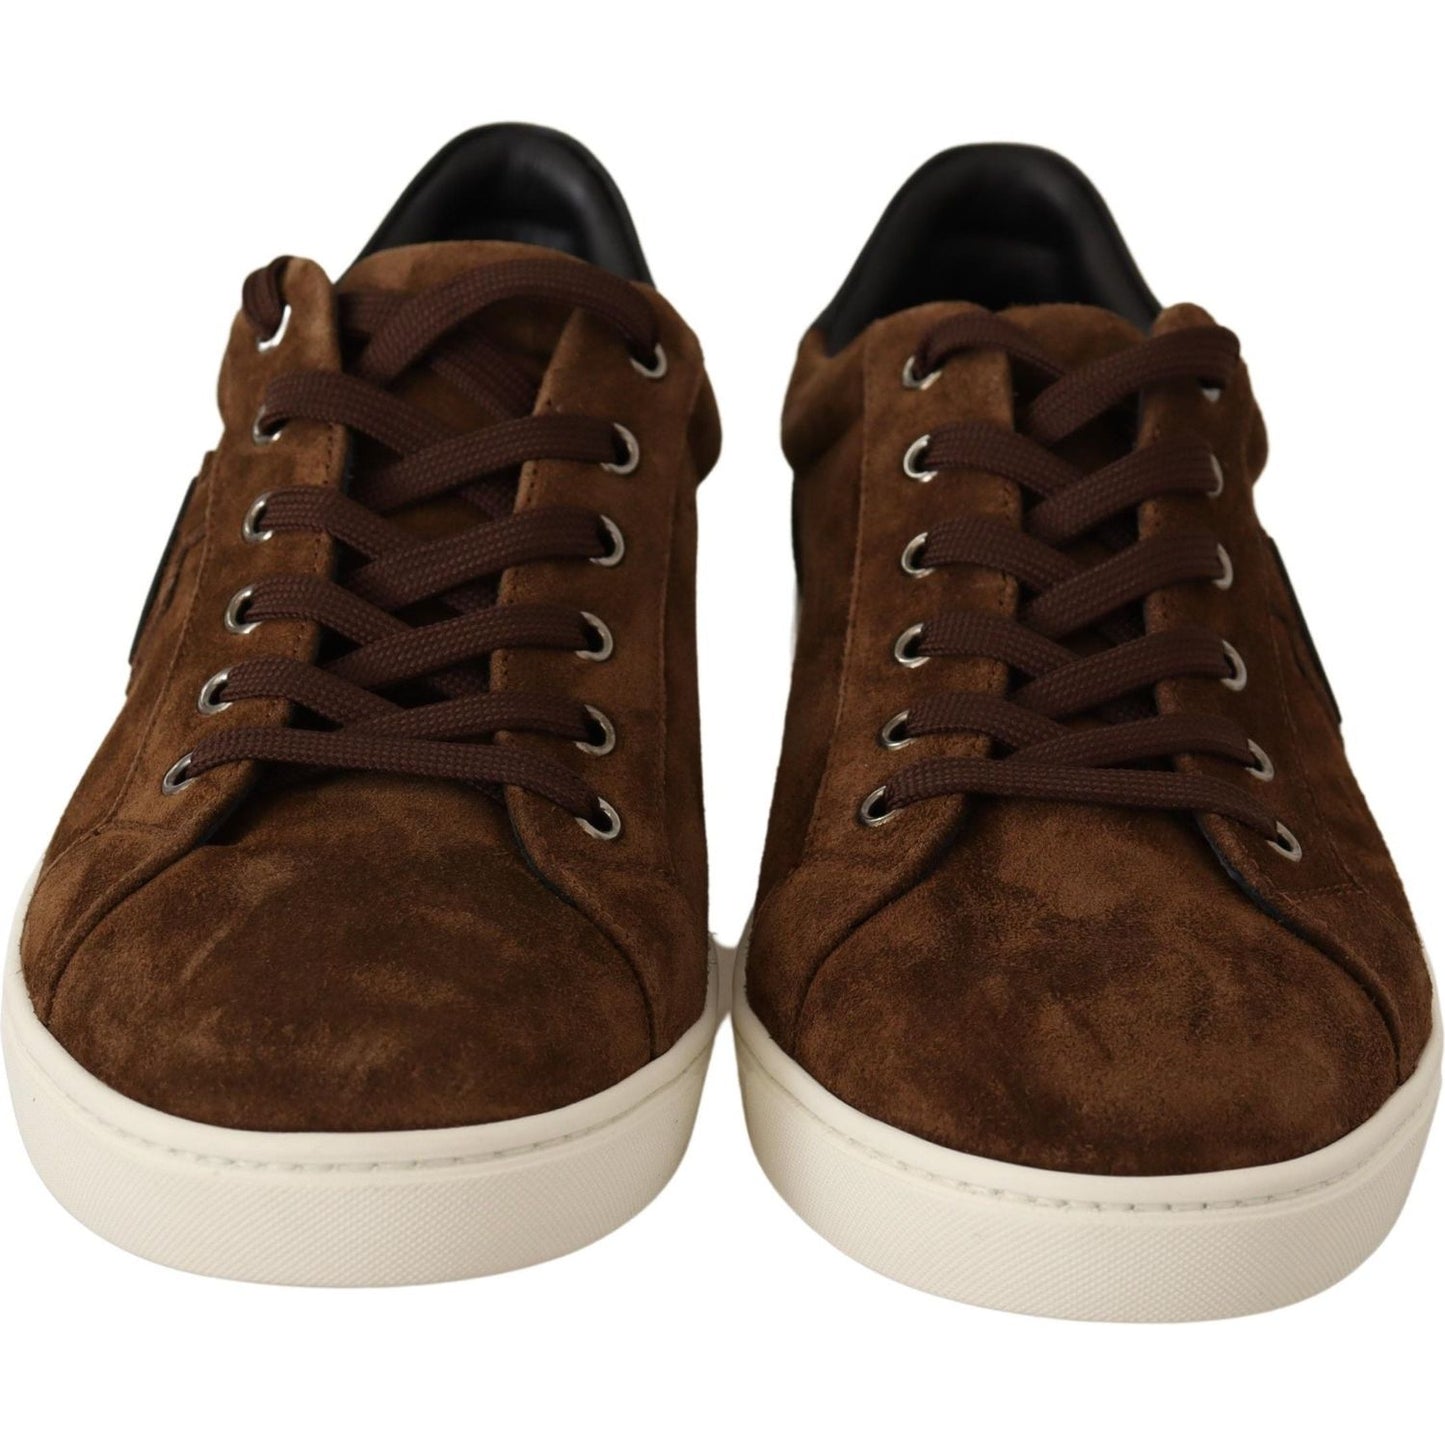 Dolce & Gabbana Elegant Leather Casual Sneakers in Brown brown-suede-leather-mens-low-tops-sneakers IMG_4819-3c775ff0-490.jpg